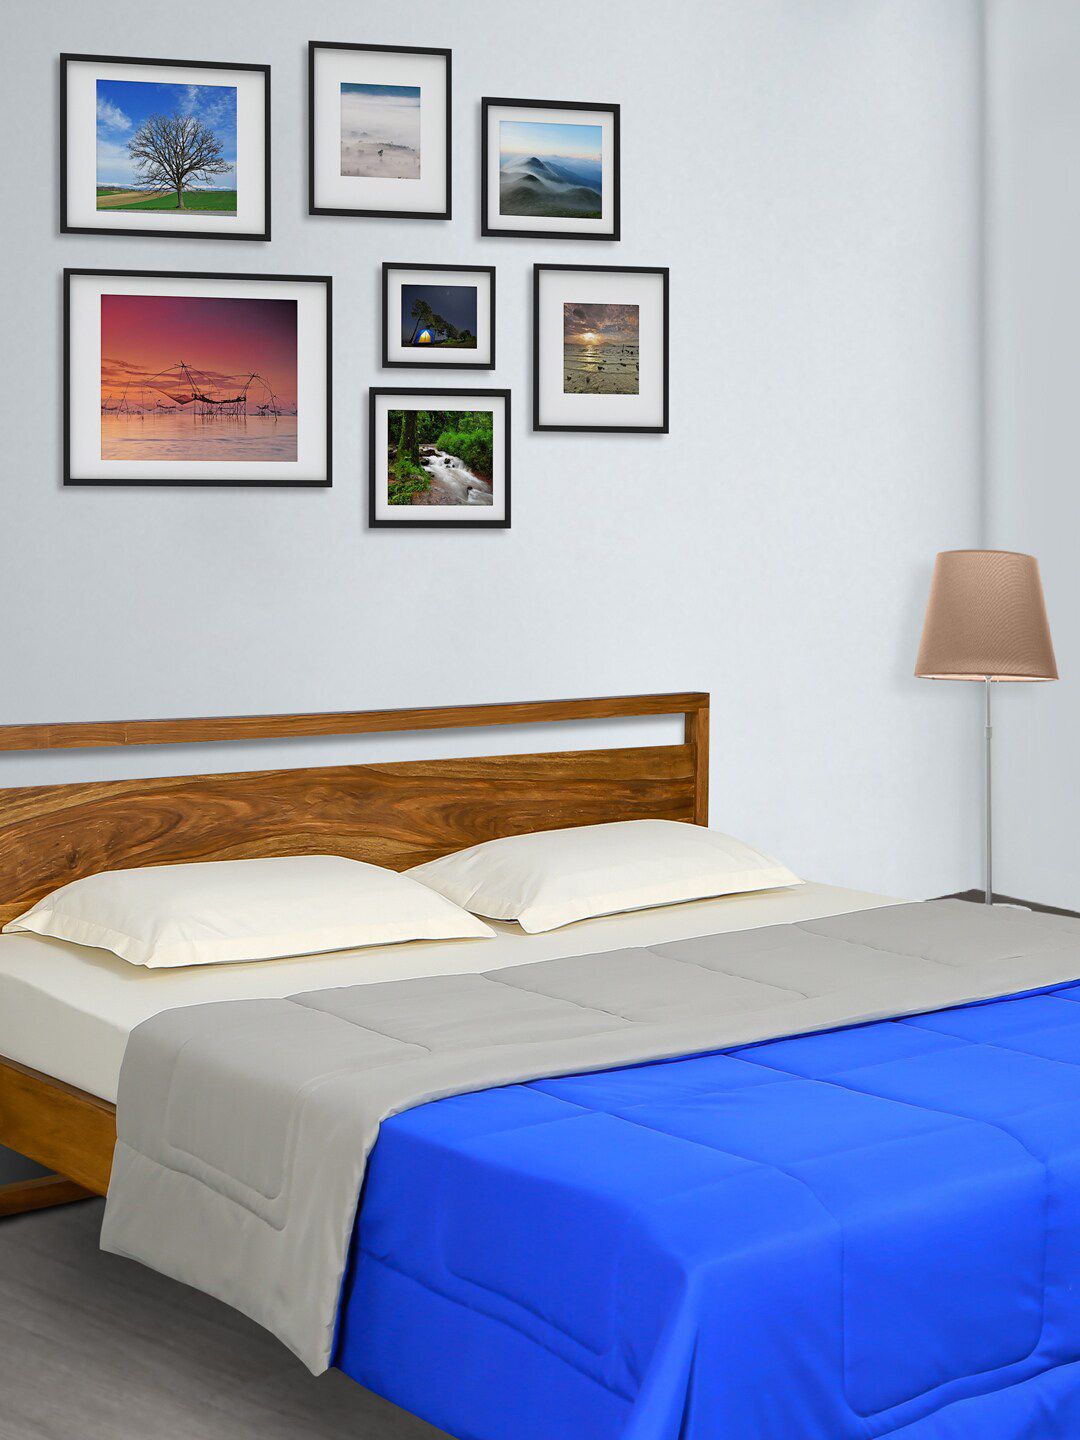 Duroflex Blue & White Mild Winter Reversible Double Bed Comforter Price in India